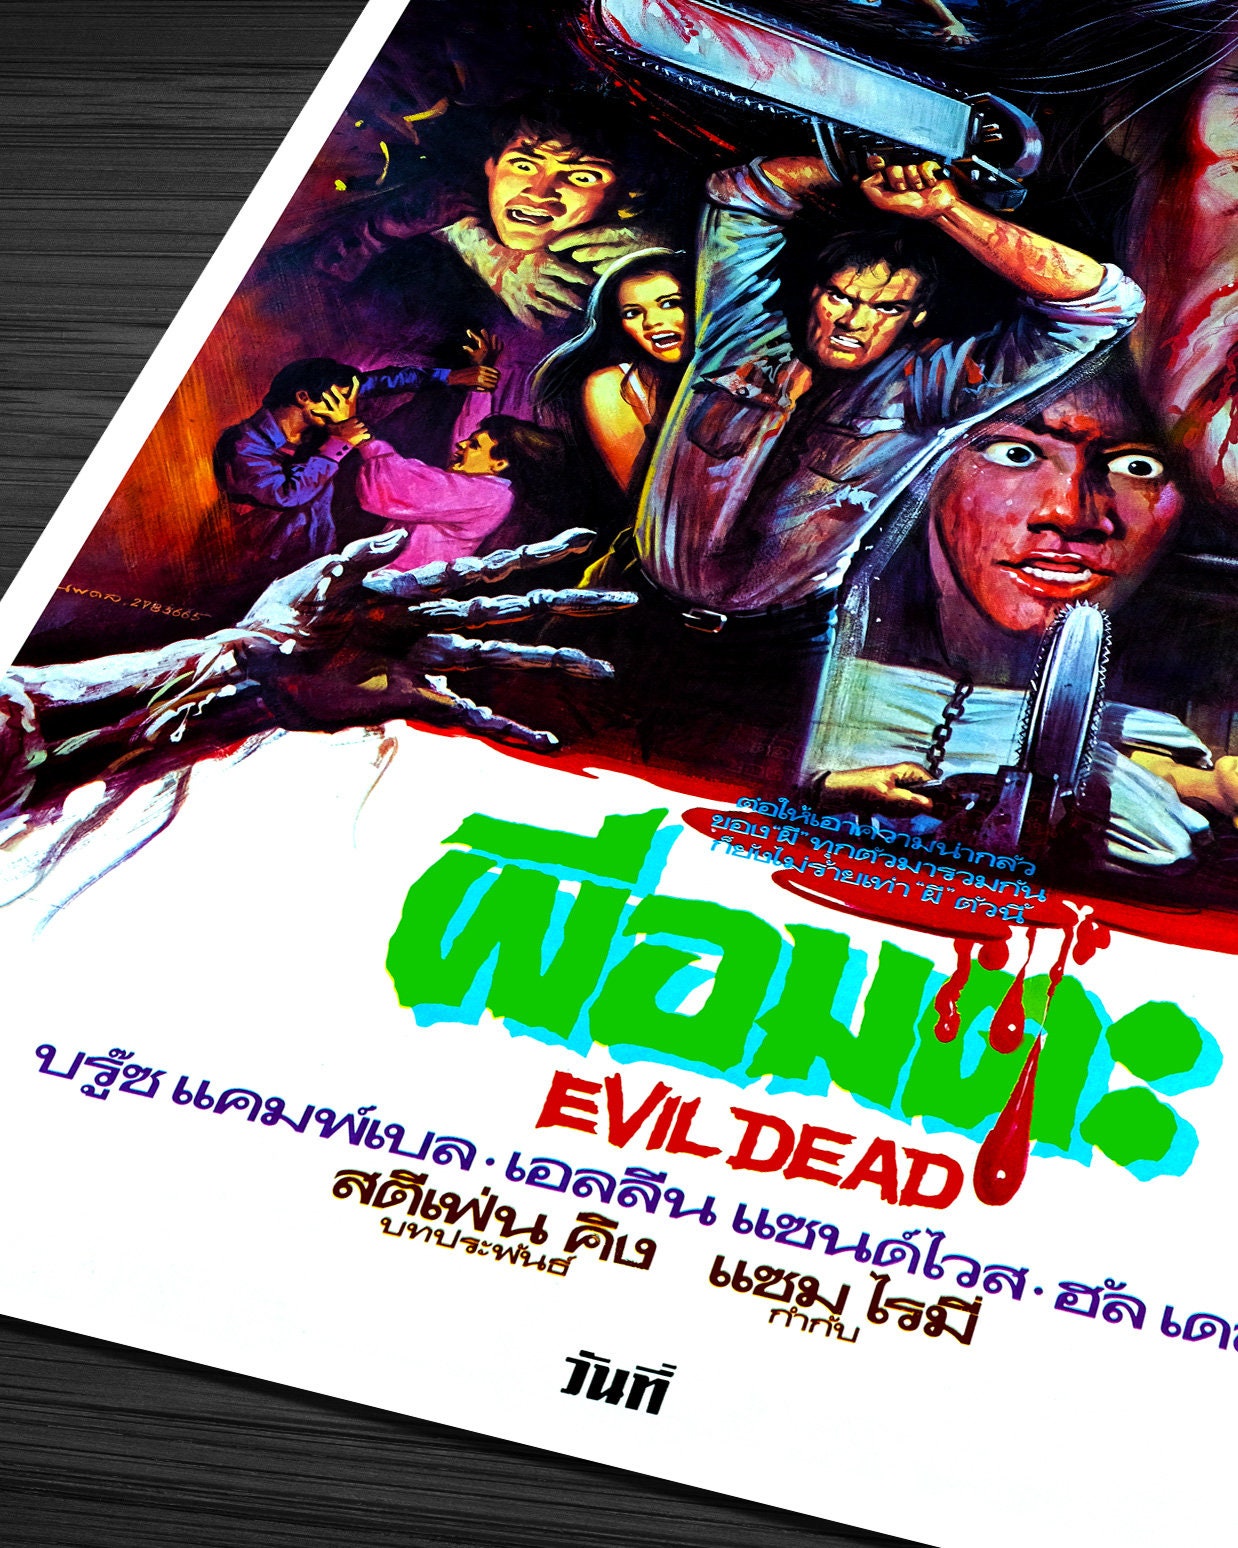 Horror Movies - Thai poster art to Sam Raimi's THE EVIL DEAD